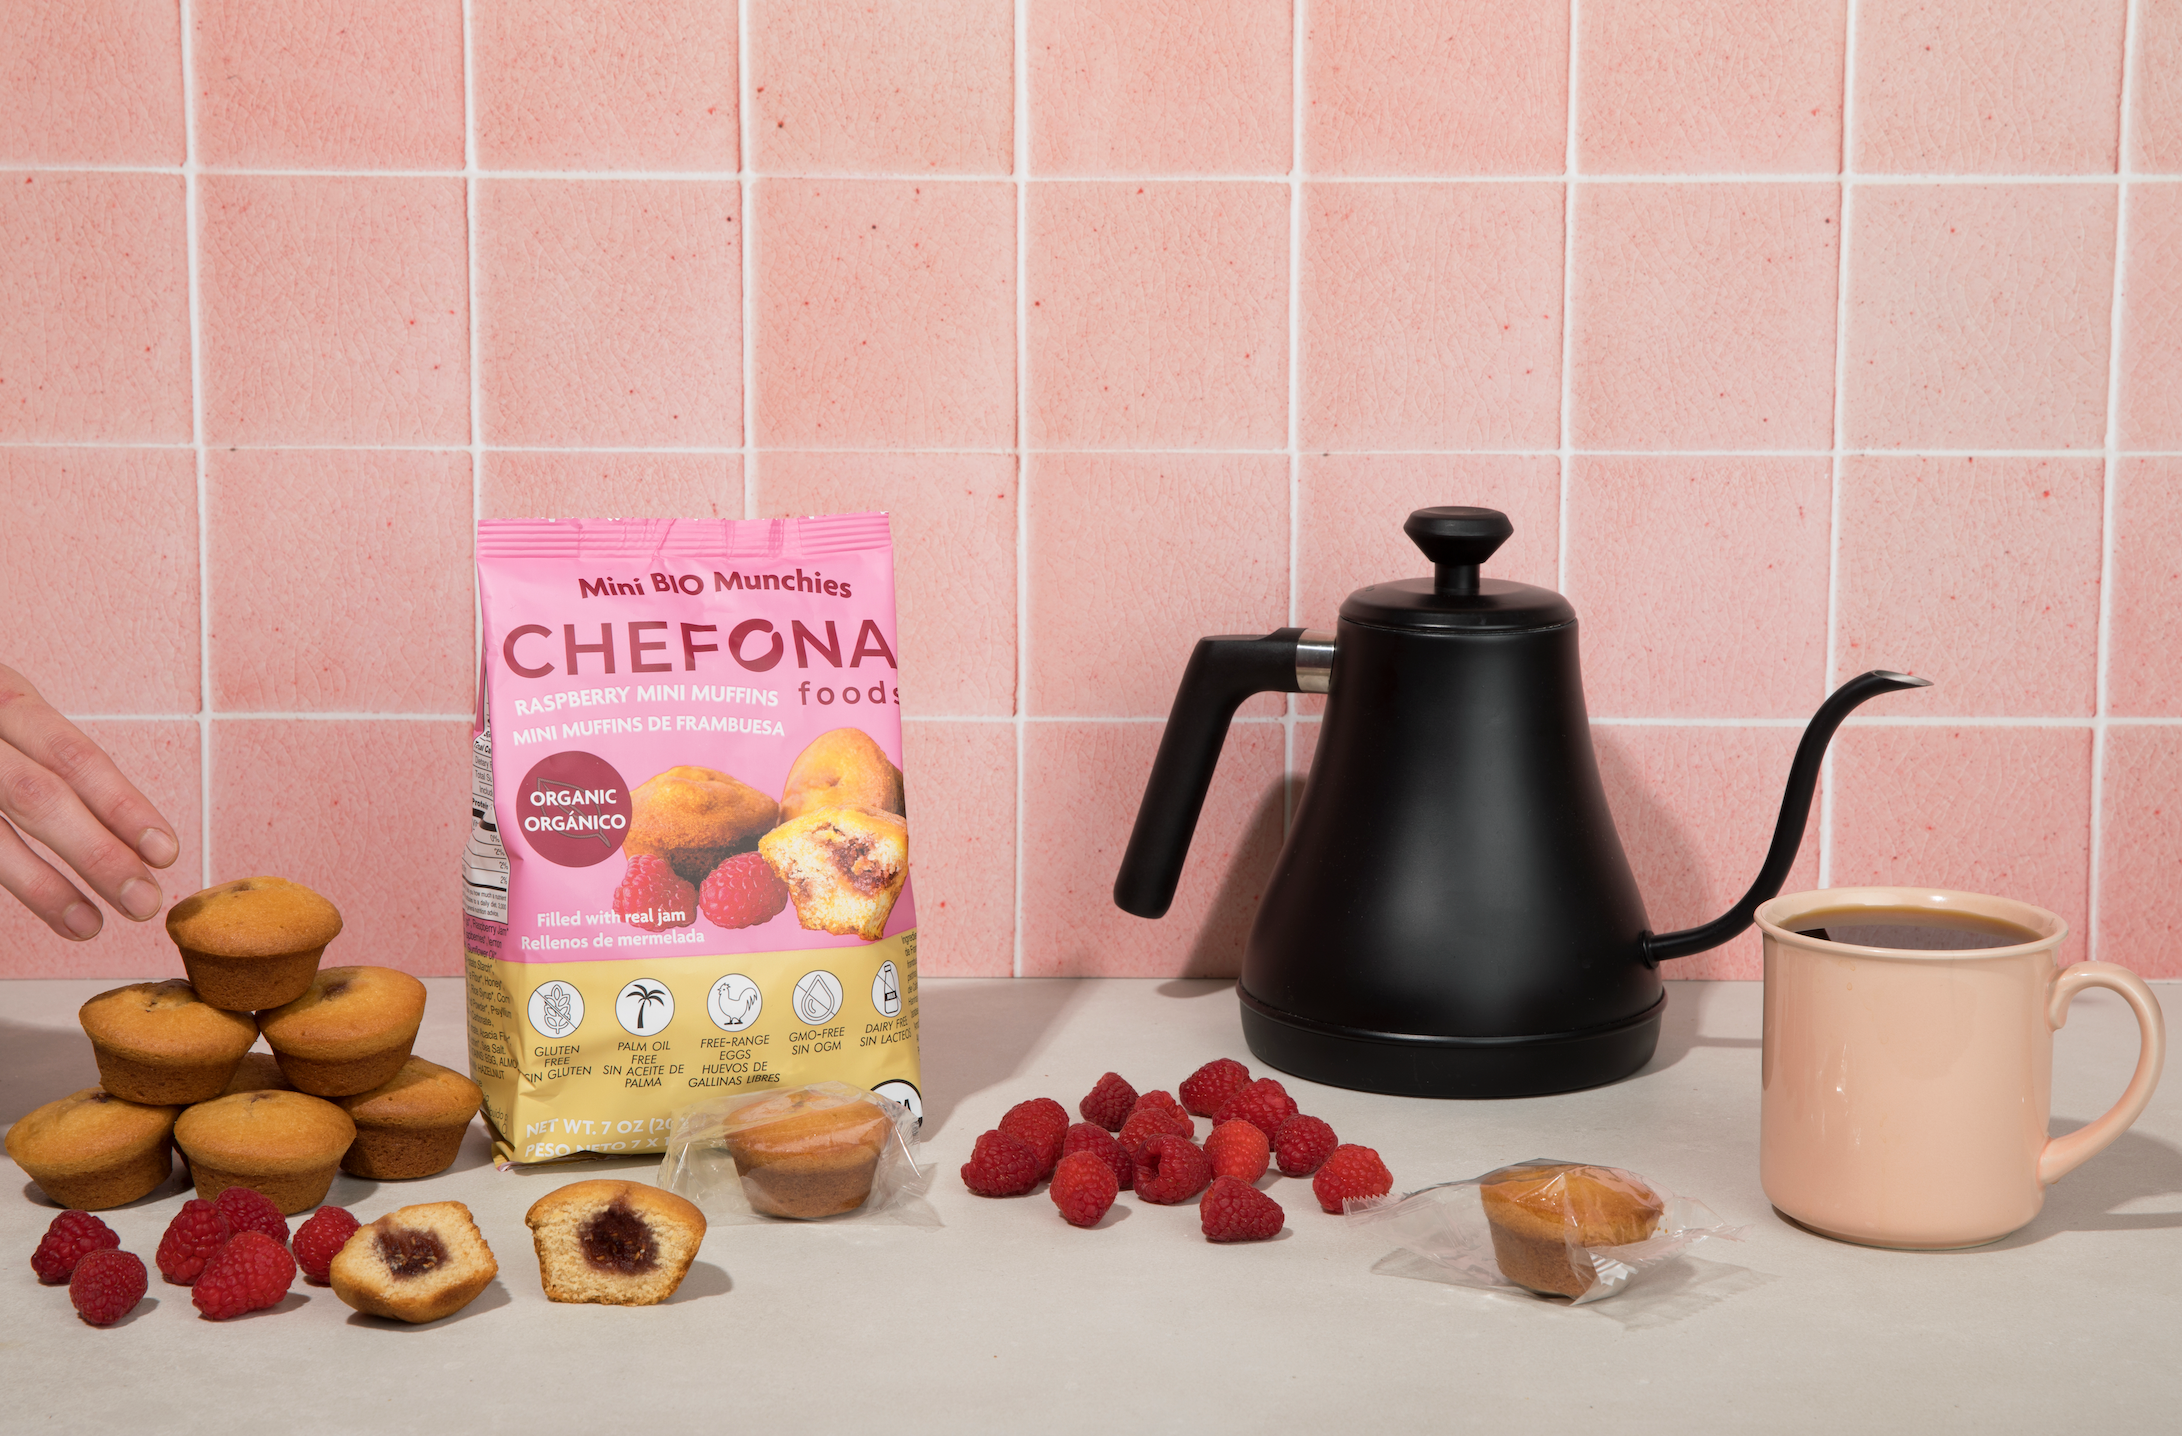 5 Creative Ways to Enjoy Chefona Organic Gluten Free Mini Muffins